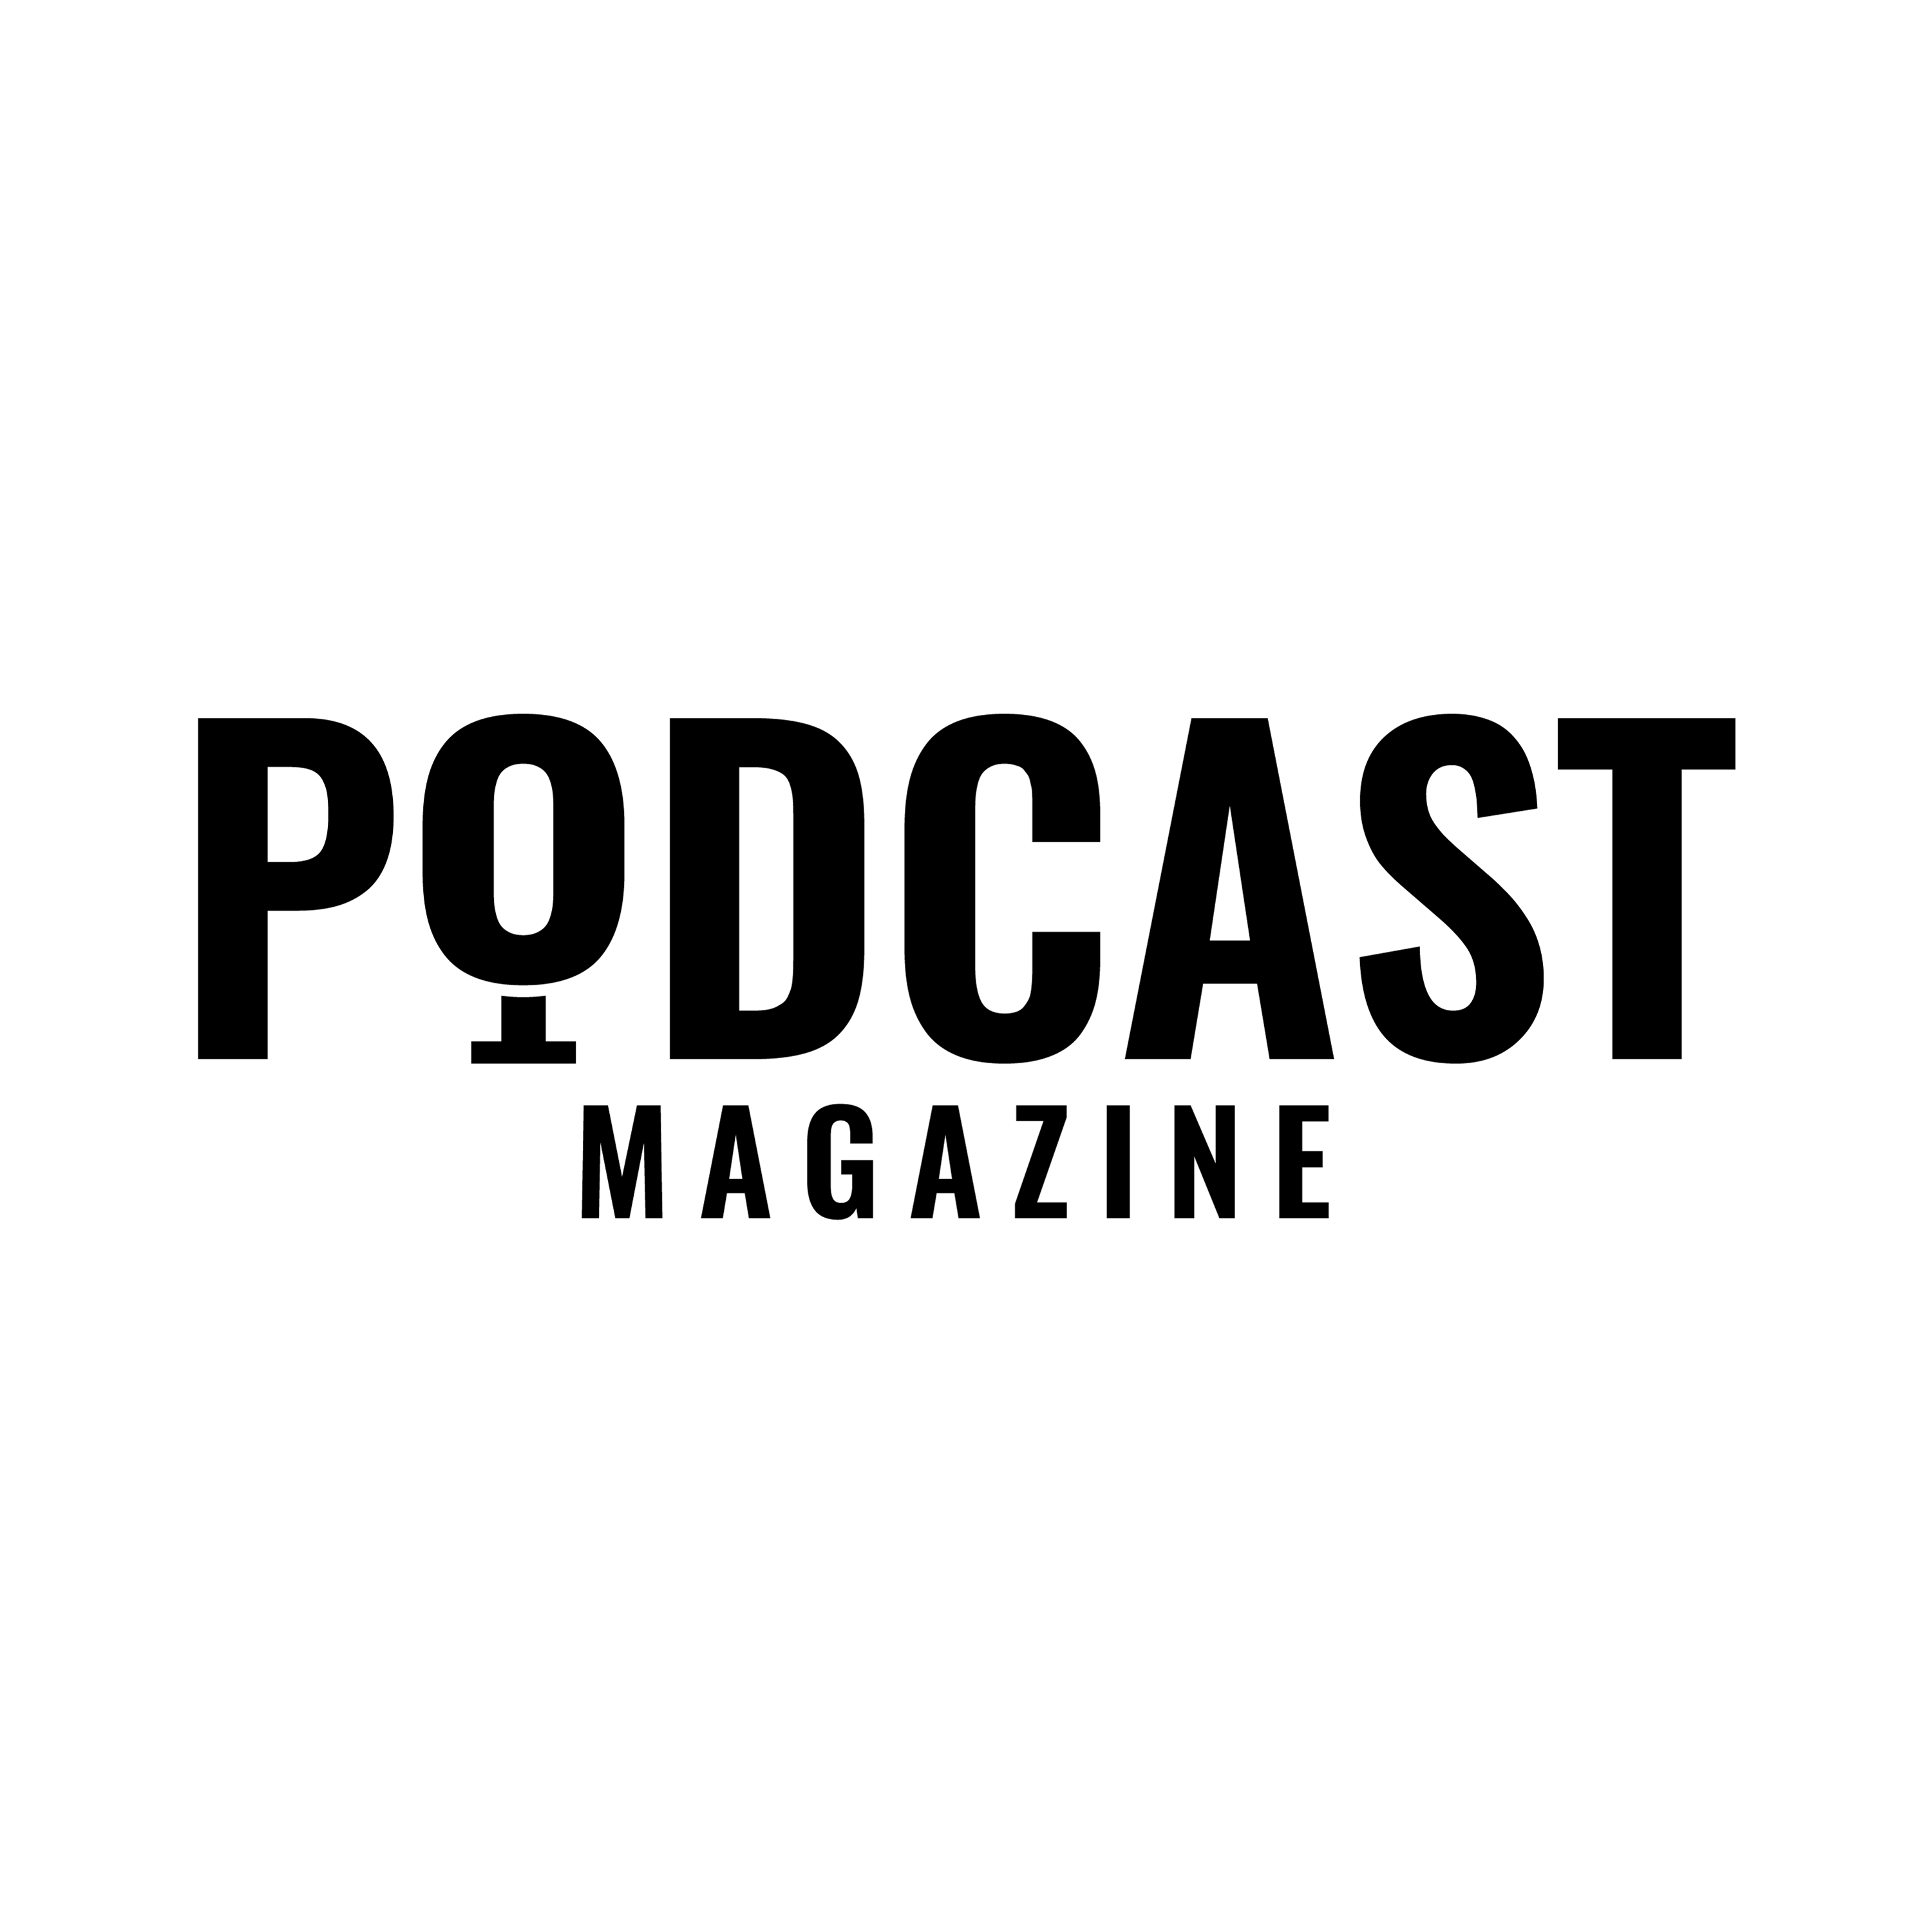 Podcast Magazine